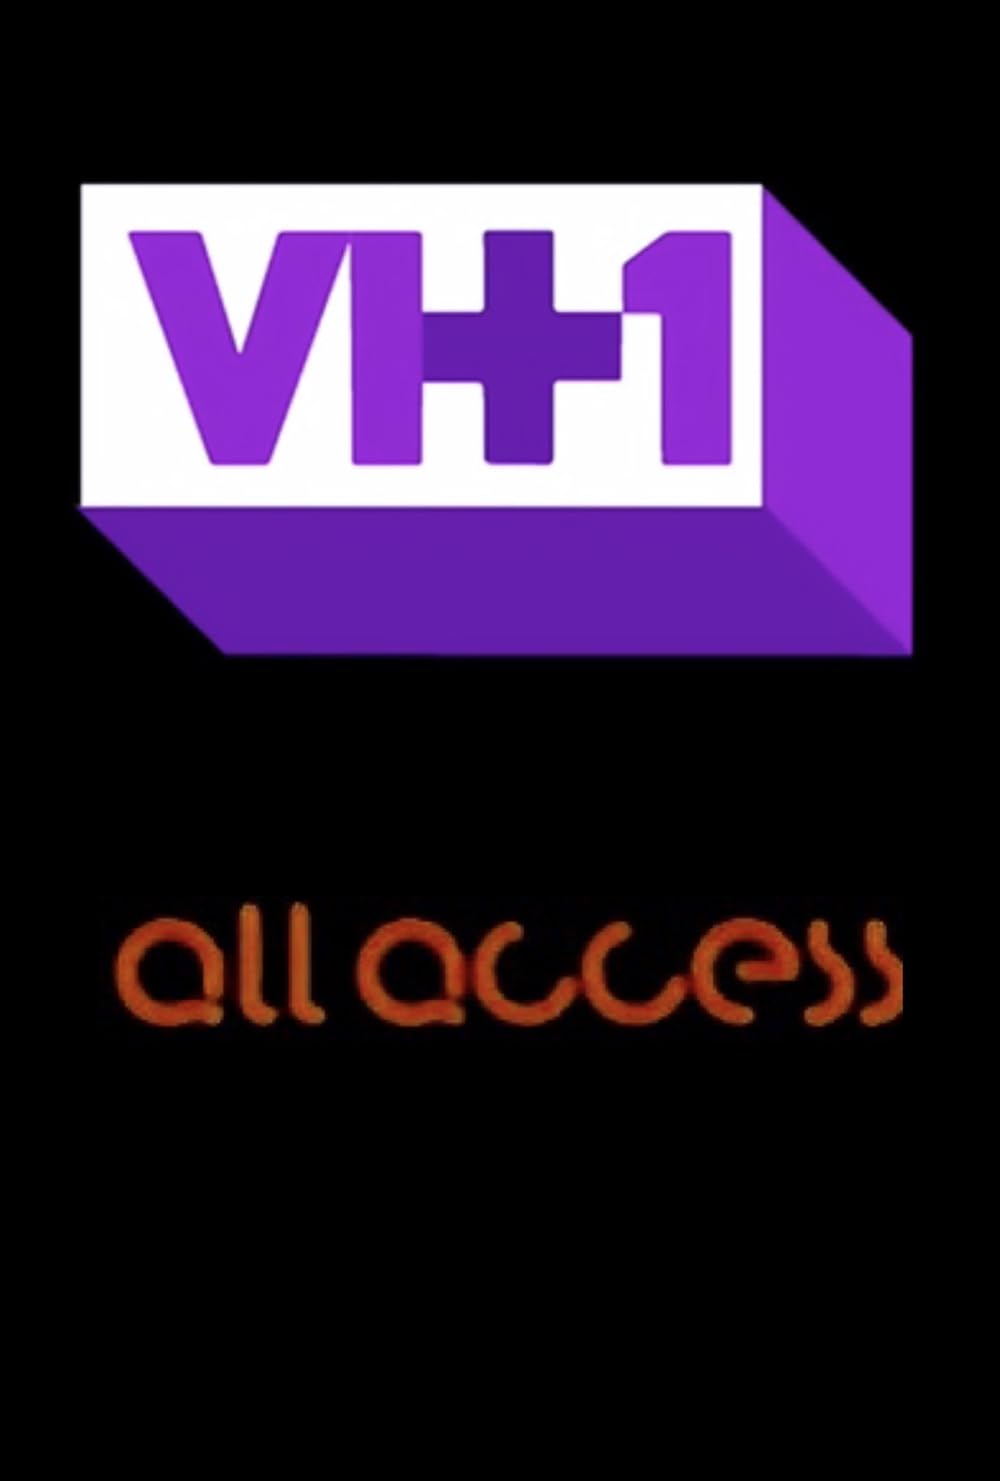 VH1: All Access